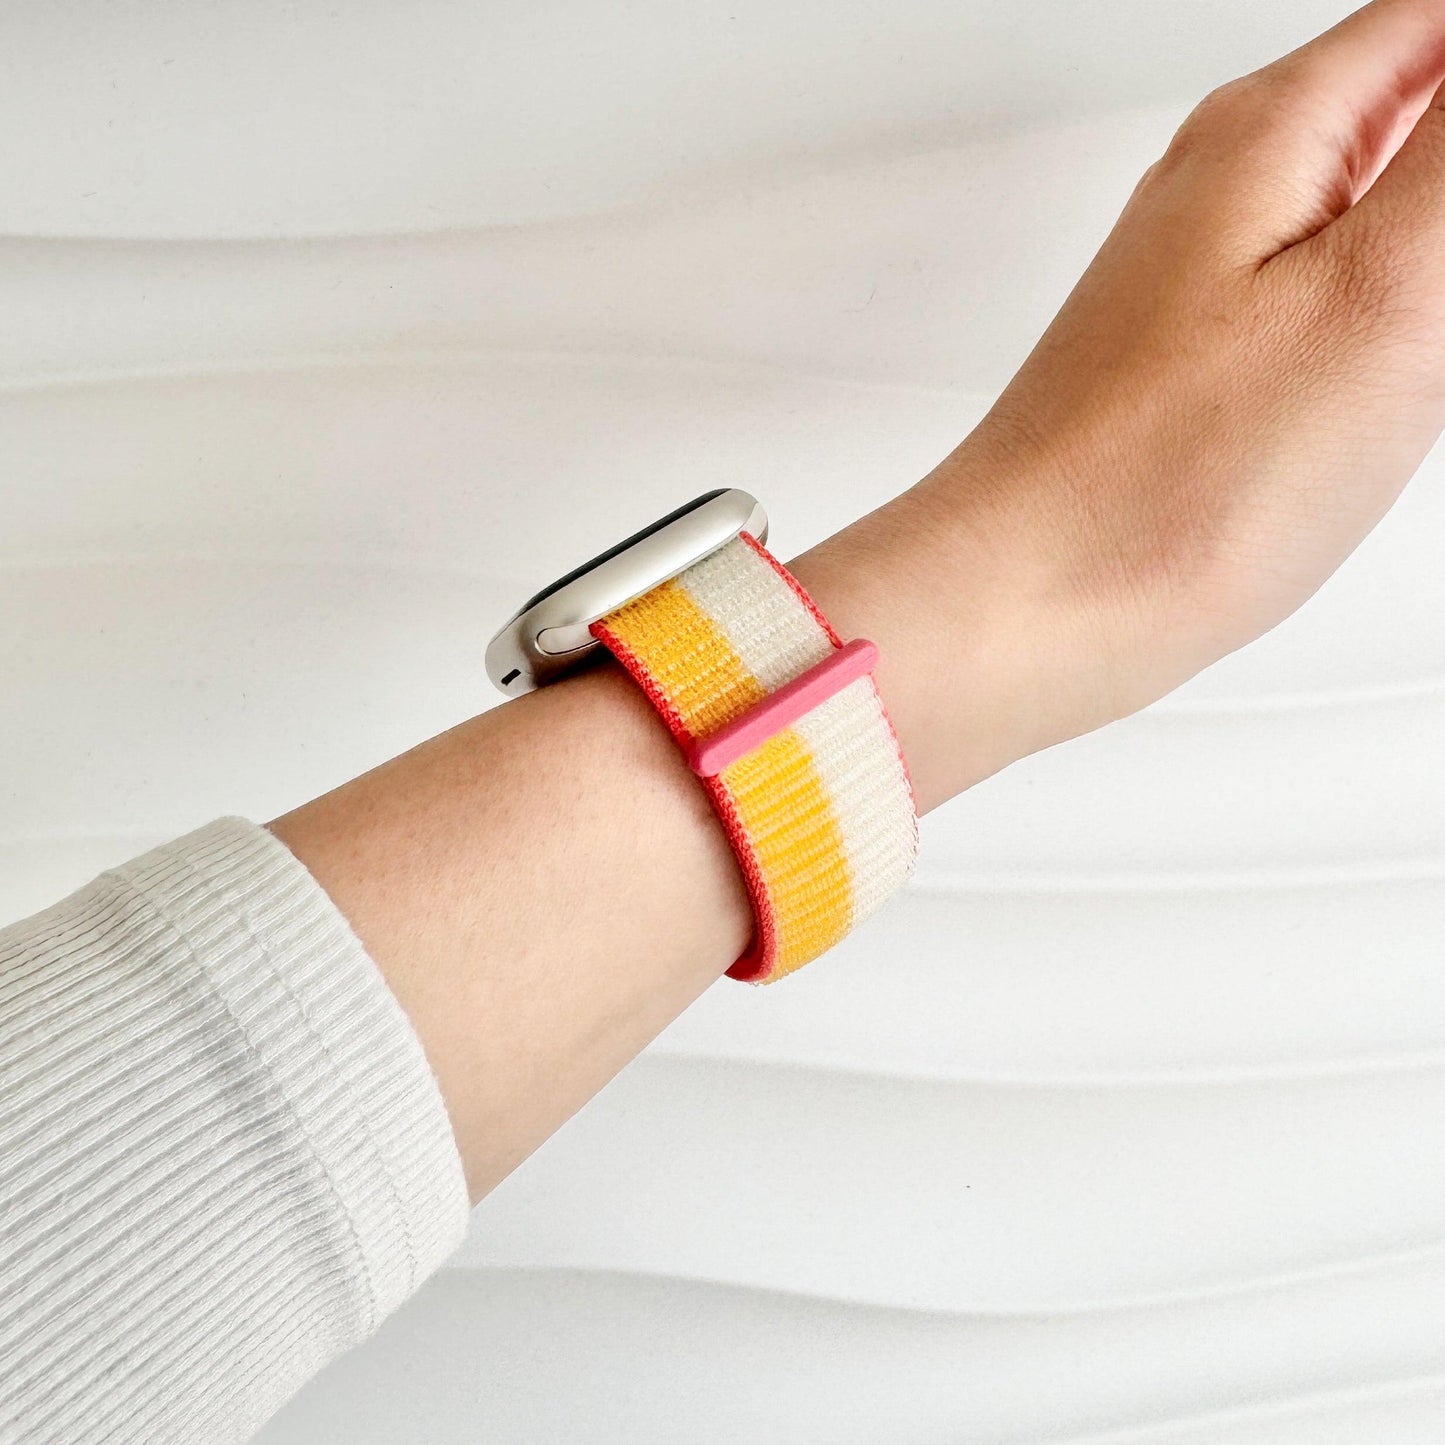 Soft Nylon Apple Watch Loop - Orange